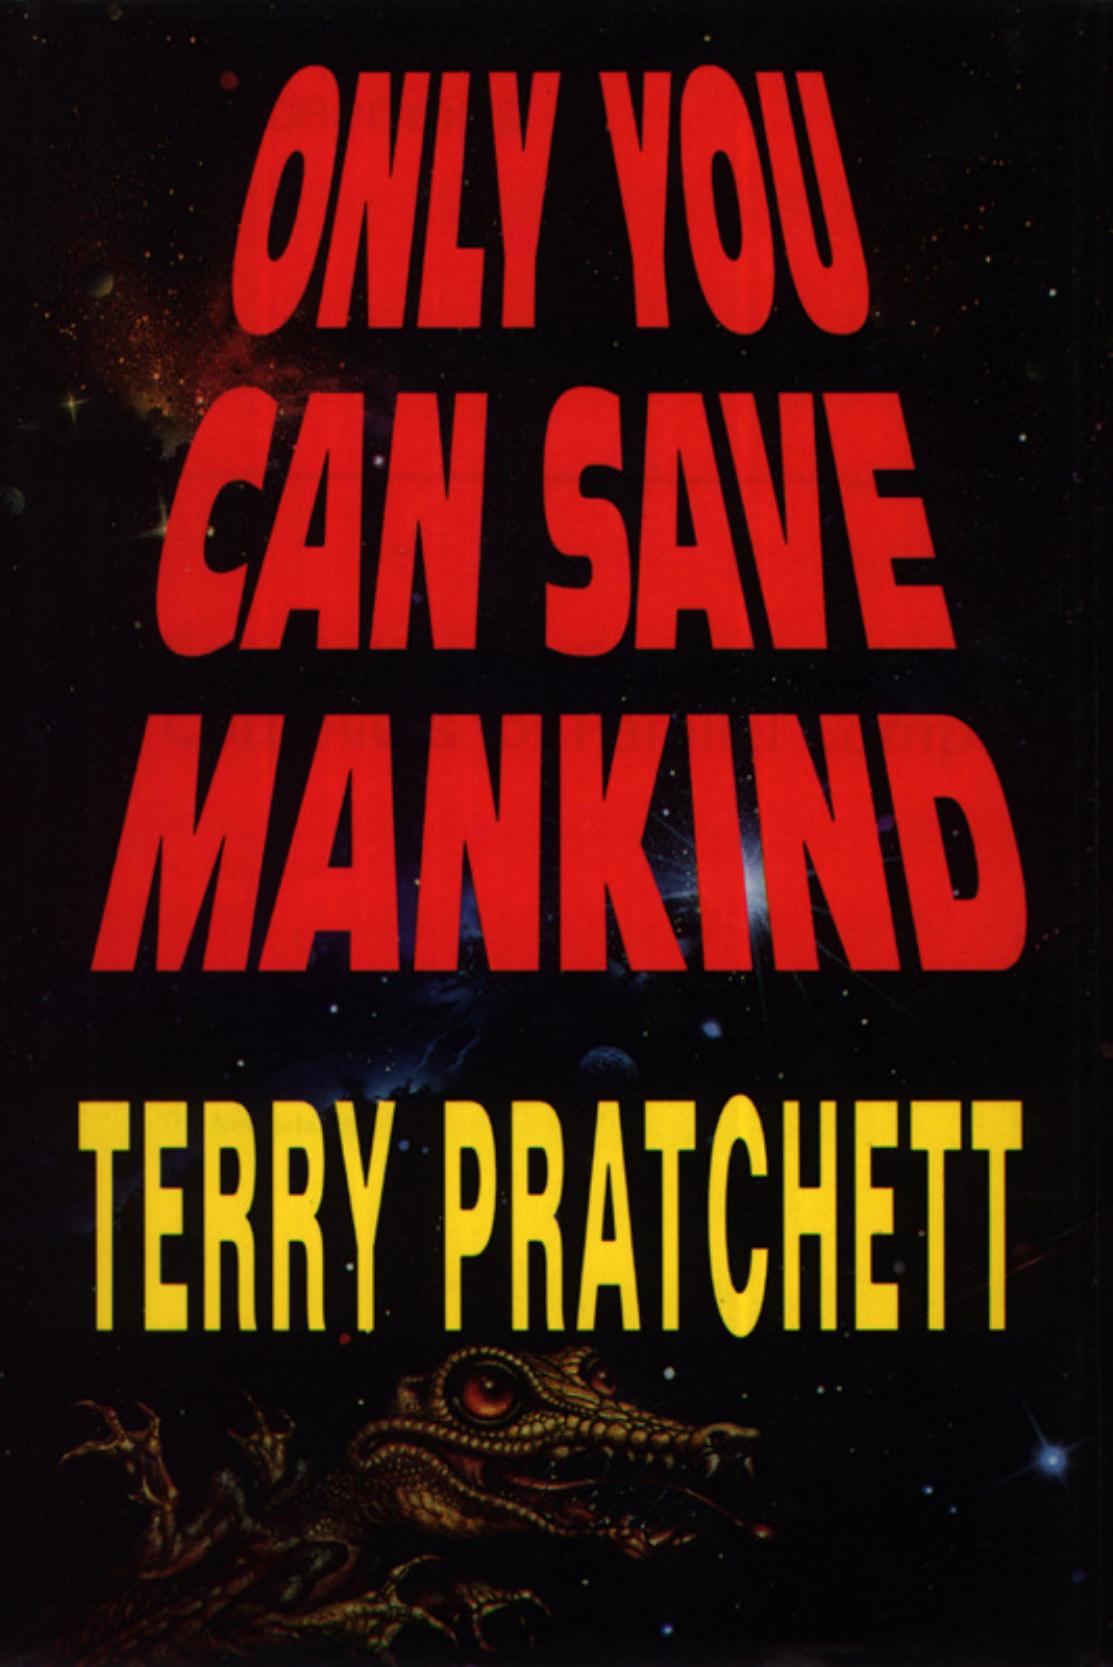 Pratchett, Terry - Johnny Maxwell 1 by Pratchett Terry